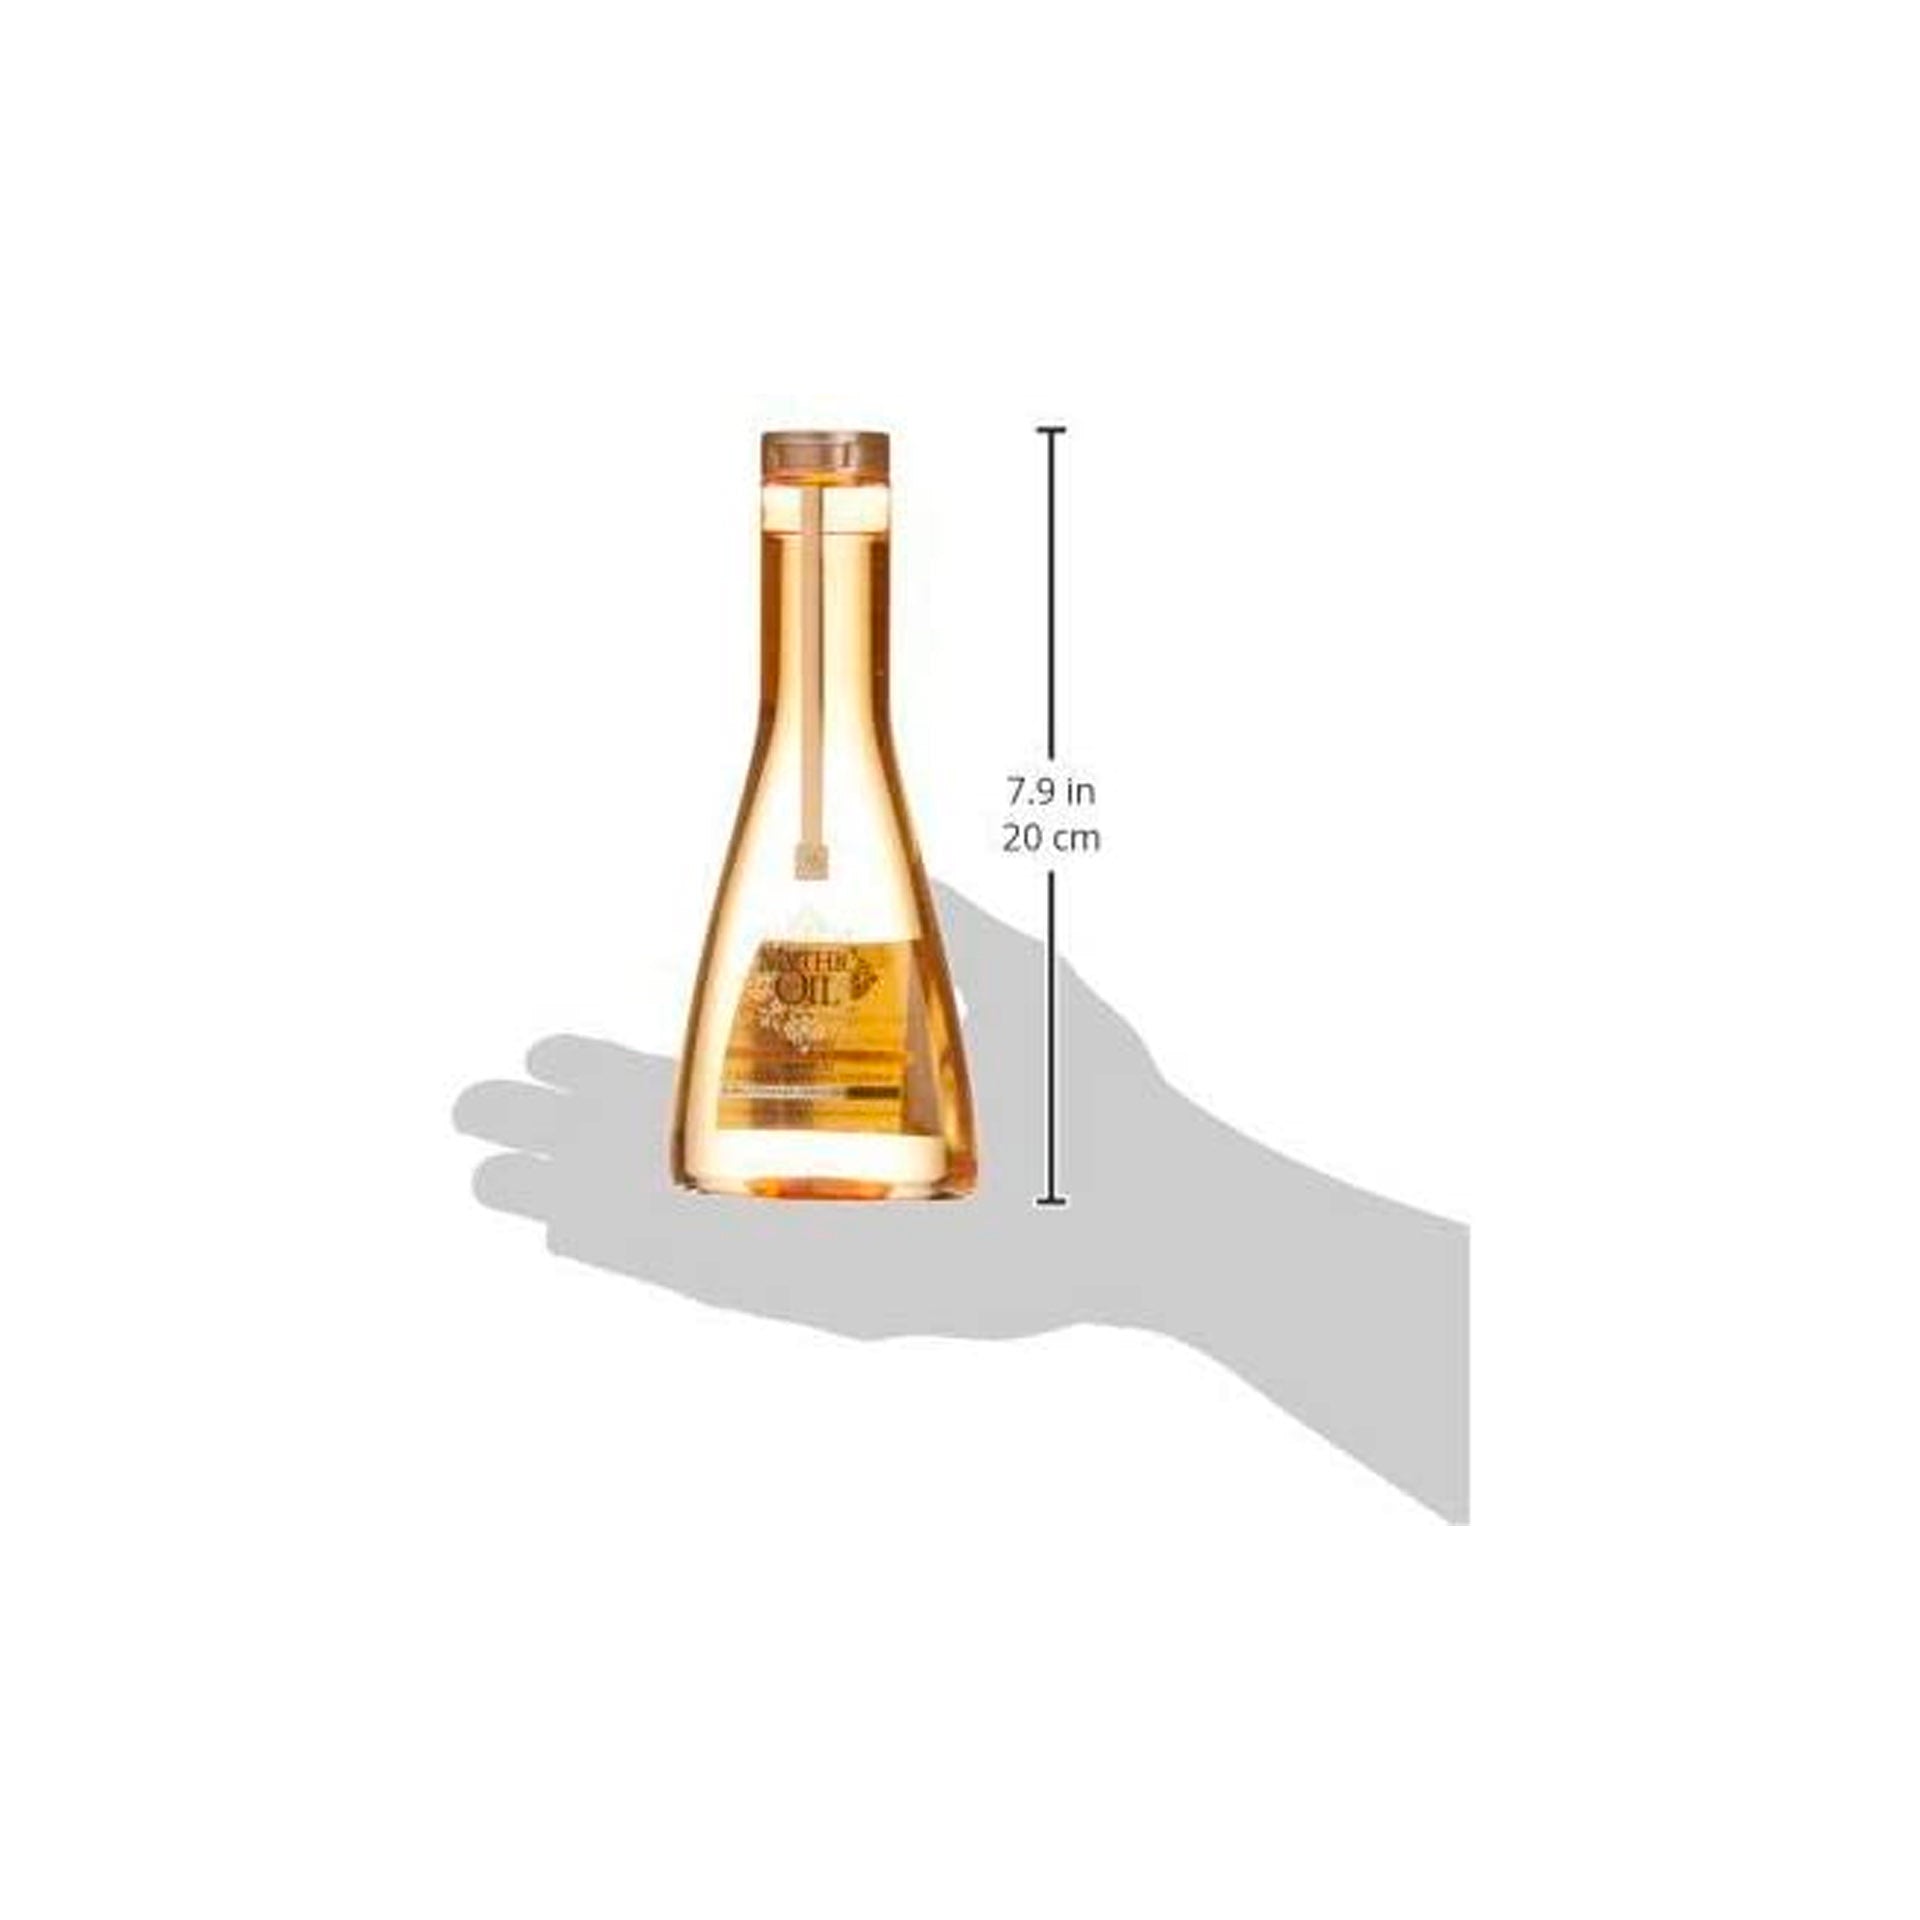 L'Oréal Mythic Oil Champô Normais a Finos 250 ml